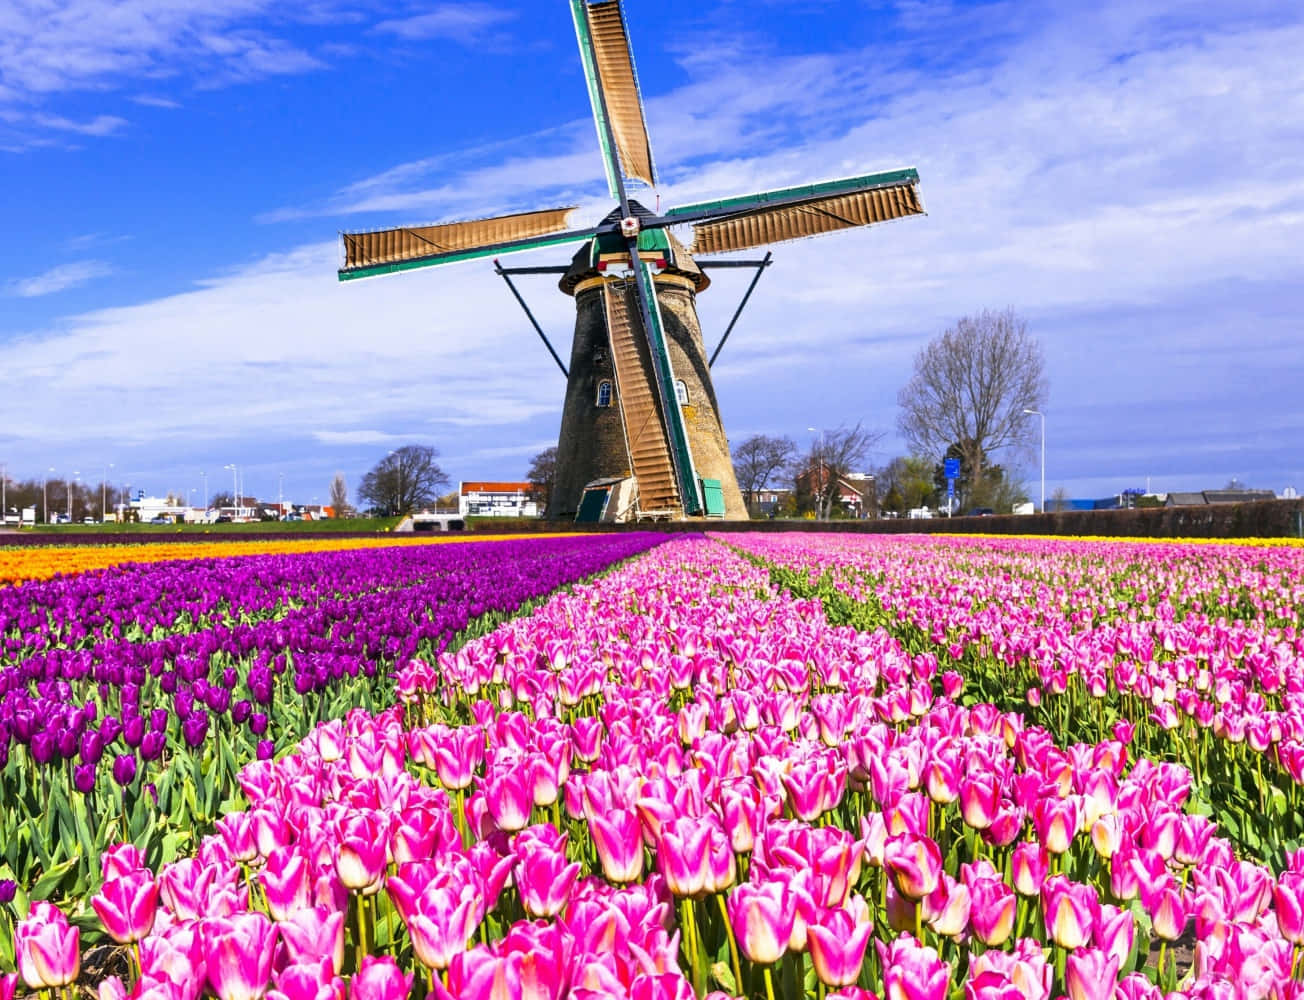 The iconic windmills of Kinderdijk, Netherlands